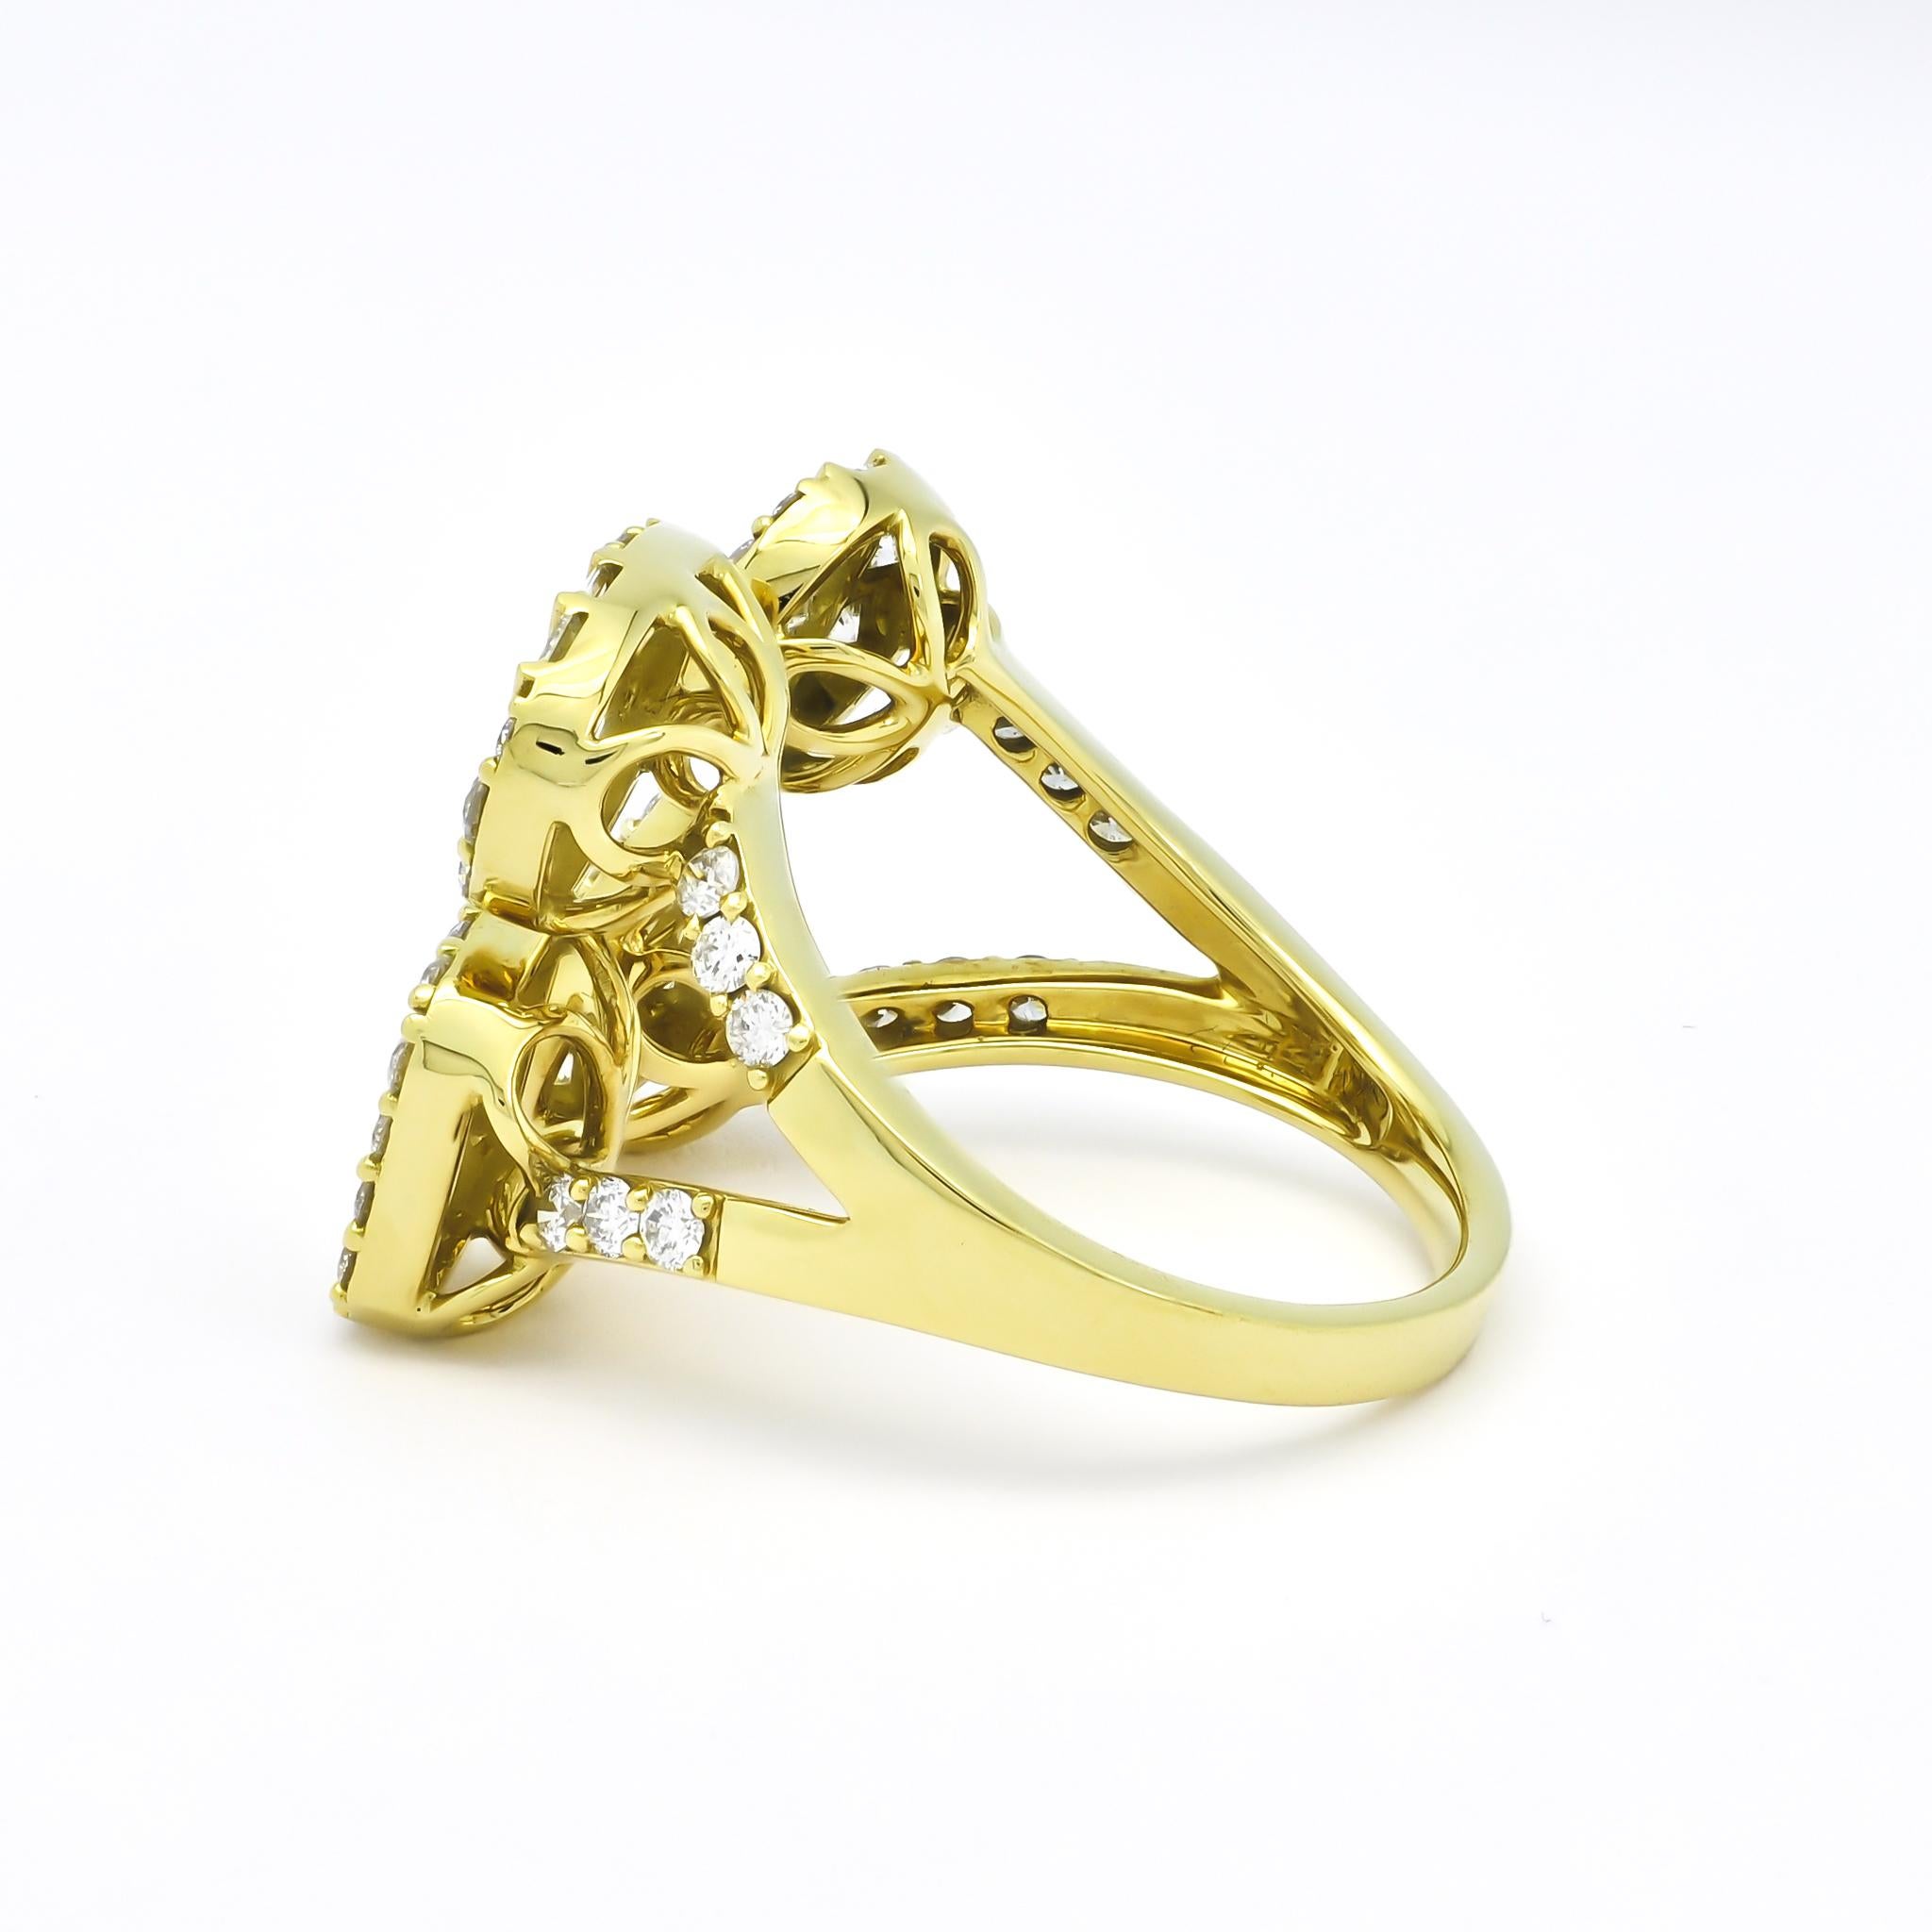 Round Cut Natural Diamond Ring 1.26 cts 18 Karat Yellow Gold High Fashion Statement Ring For Sale